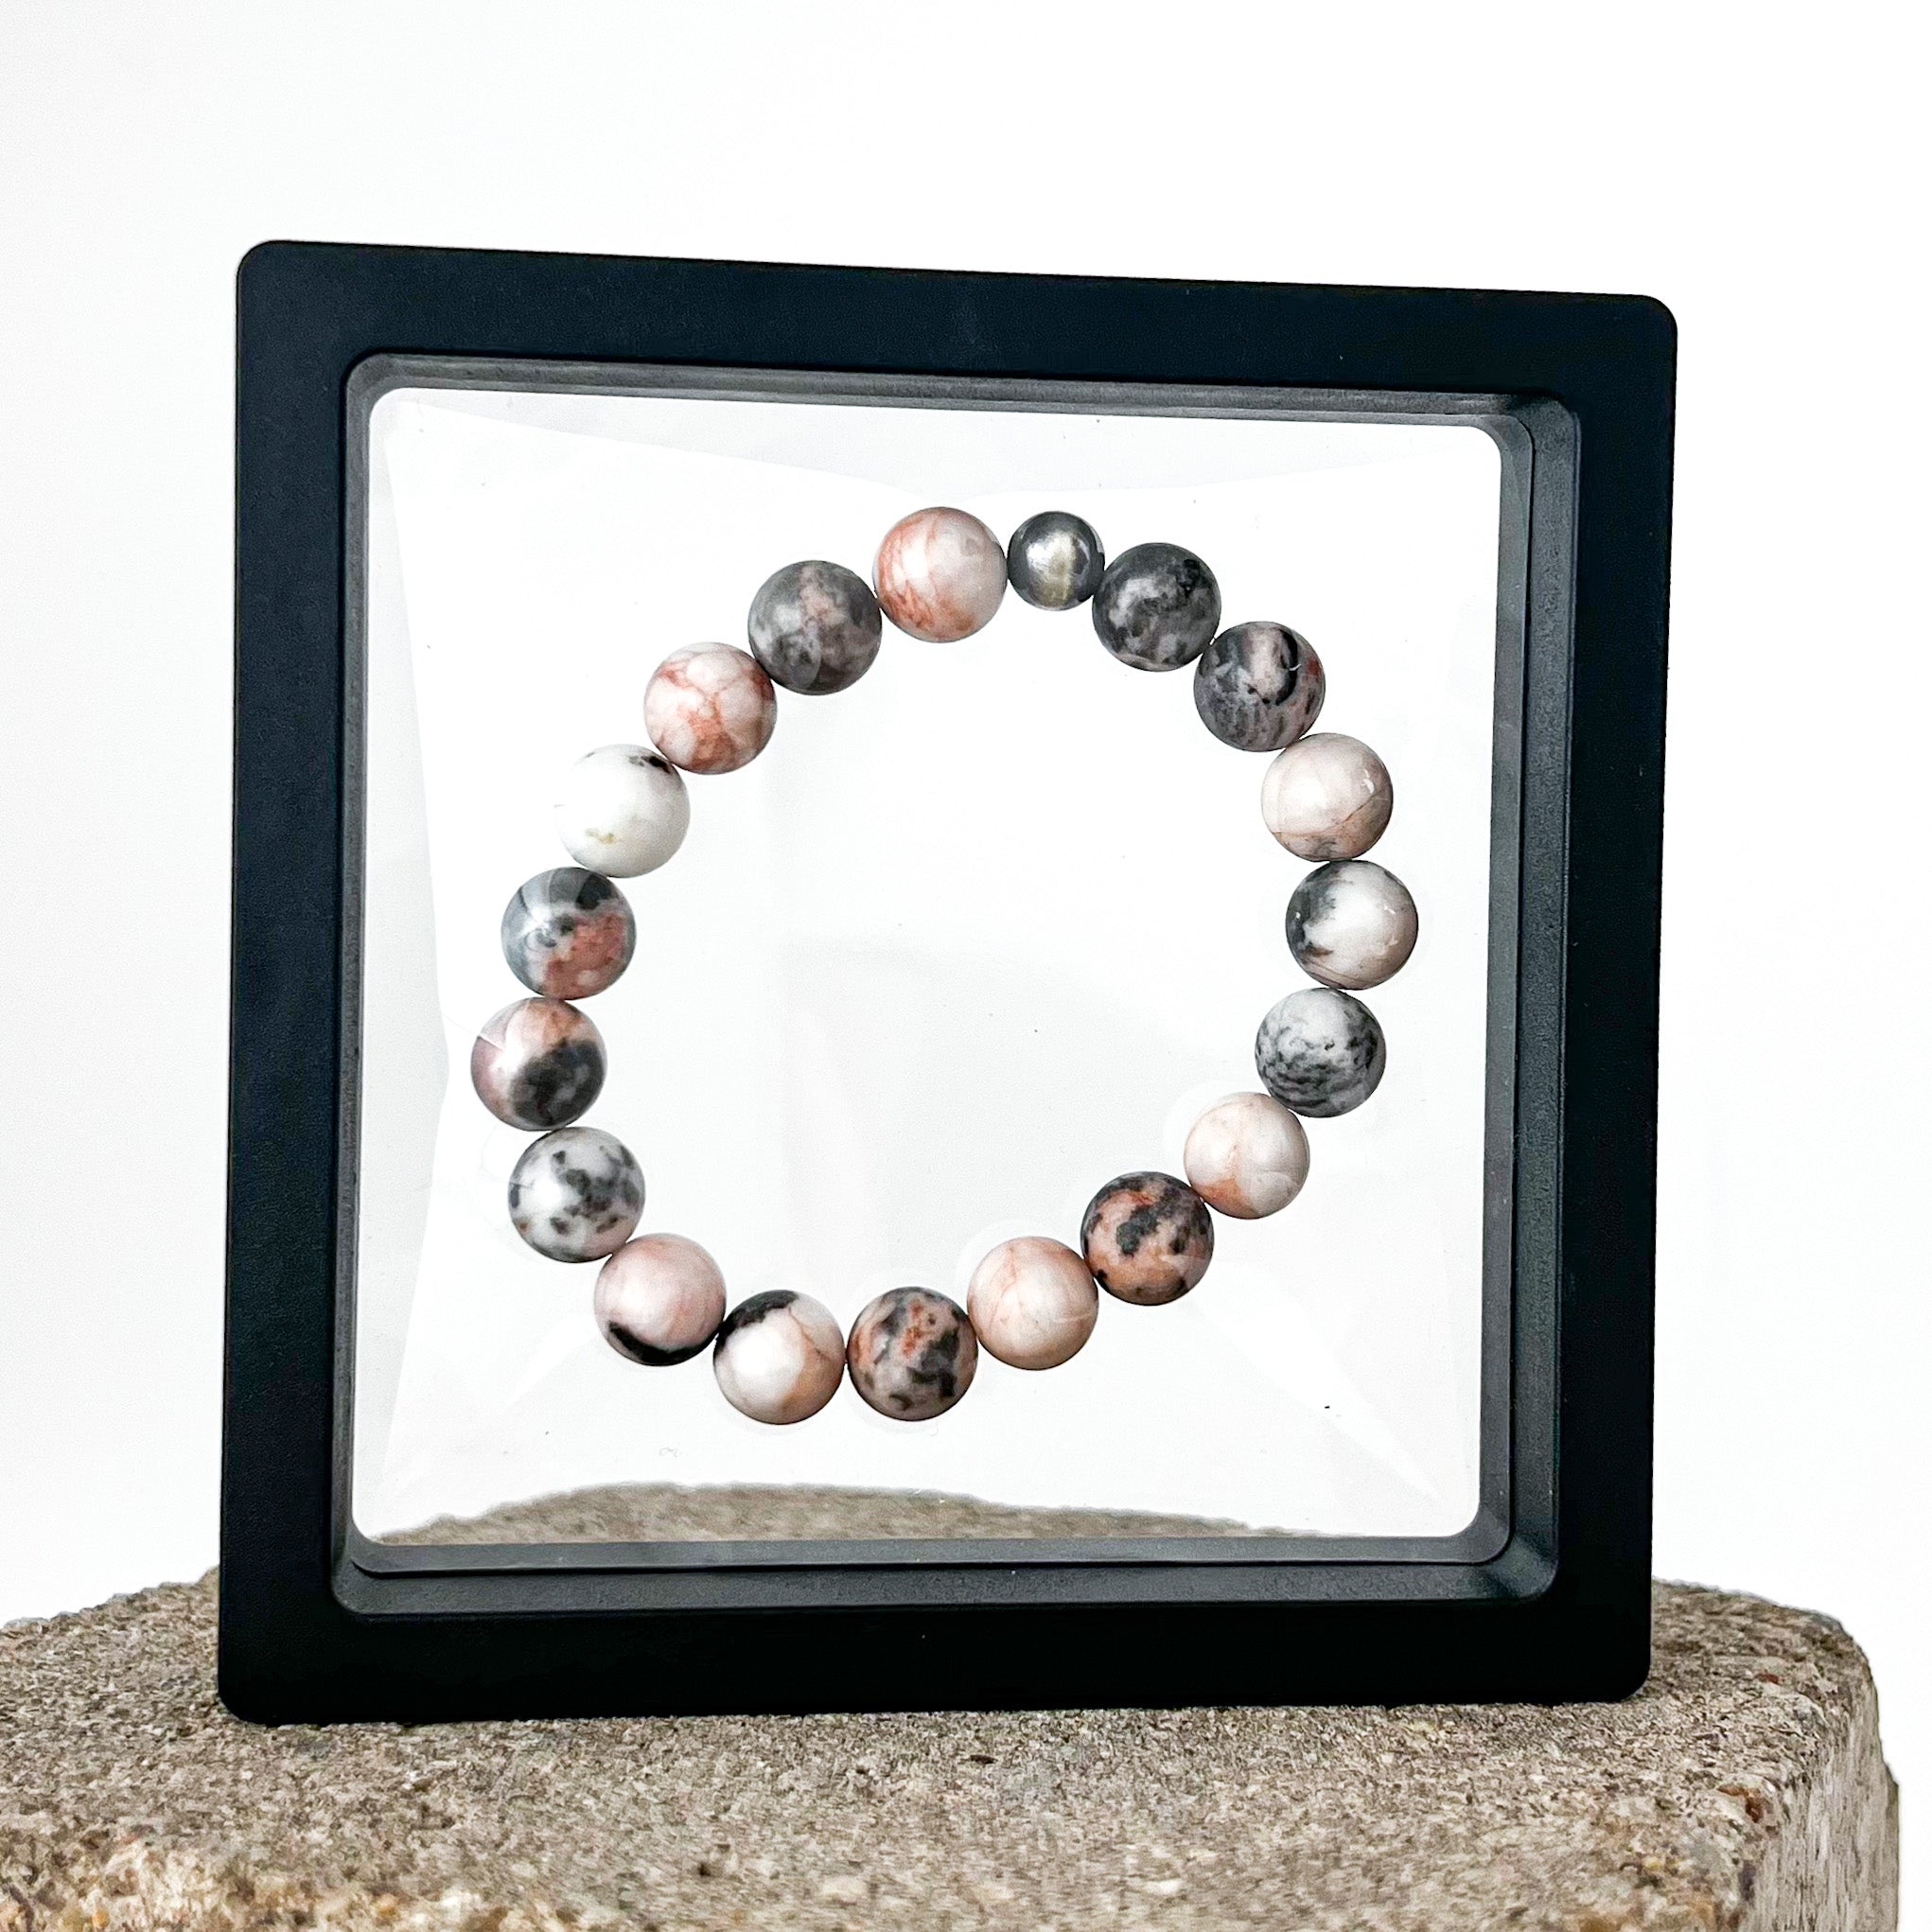 Pink Marble Sutton Bracelet | Sterling Silver | Genuine Gemstone | Gift For Her | Layering Stretch Beaded Bracelet